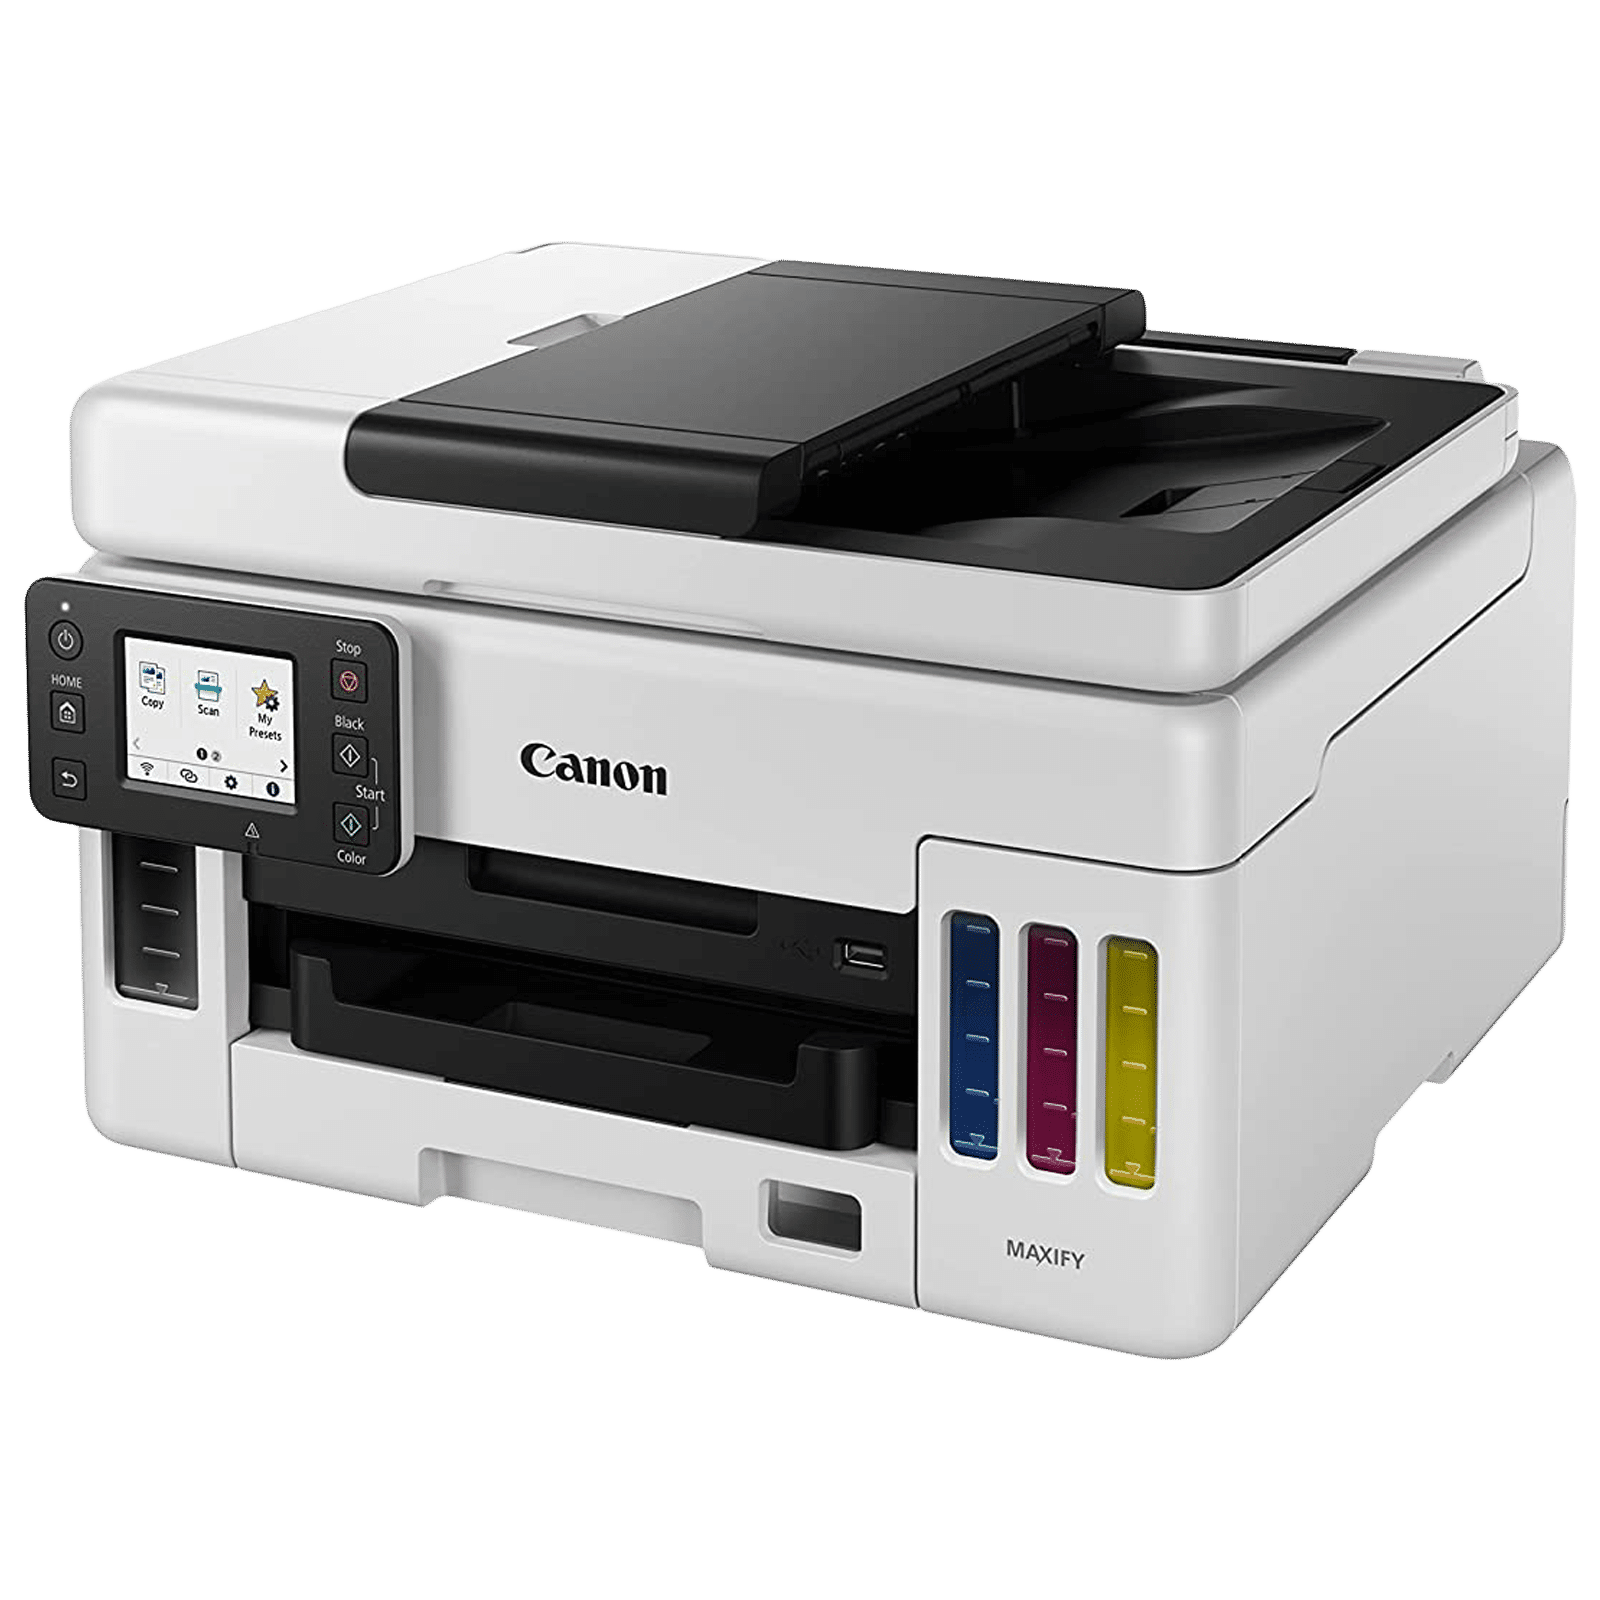 Buy Canon Maxify Gx6070 Wireless Color Multi Function Ink Tank Printer Contact Image Sensor 6100